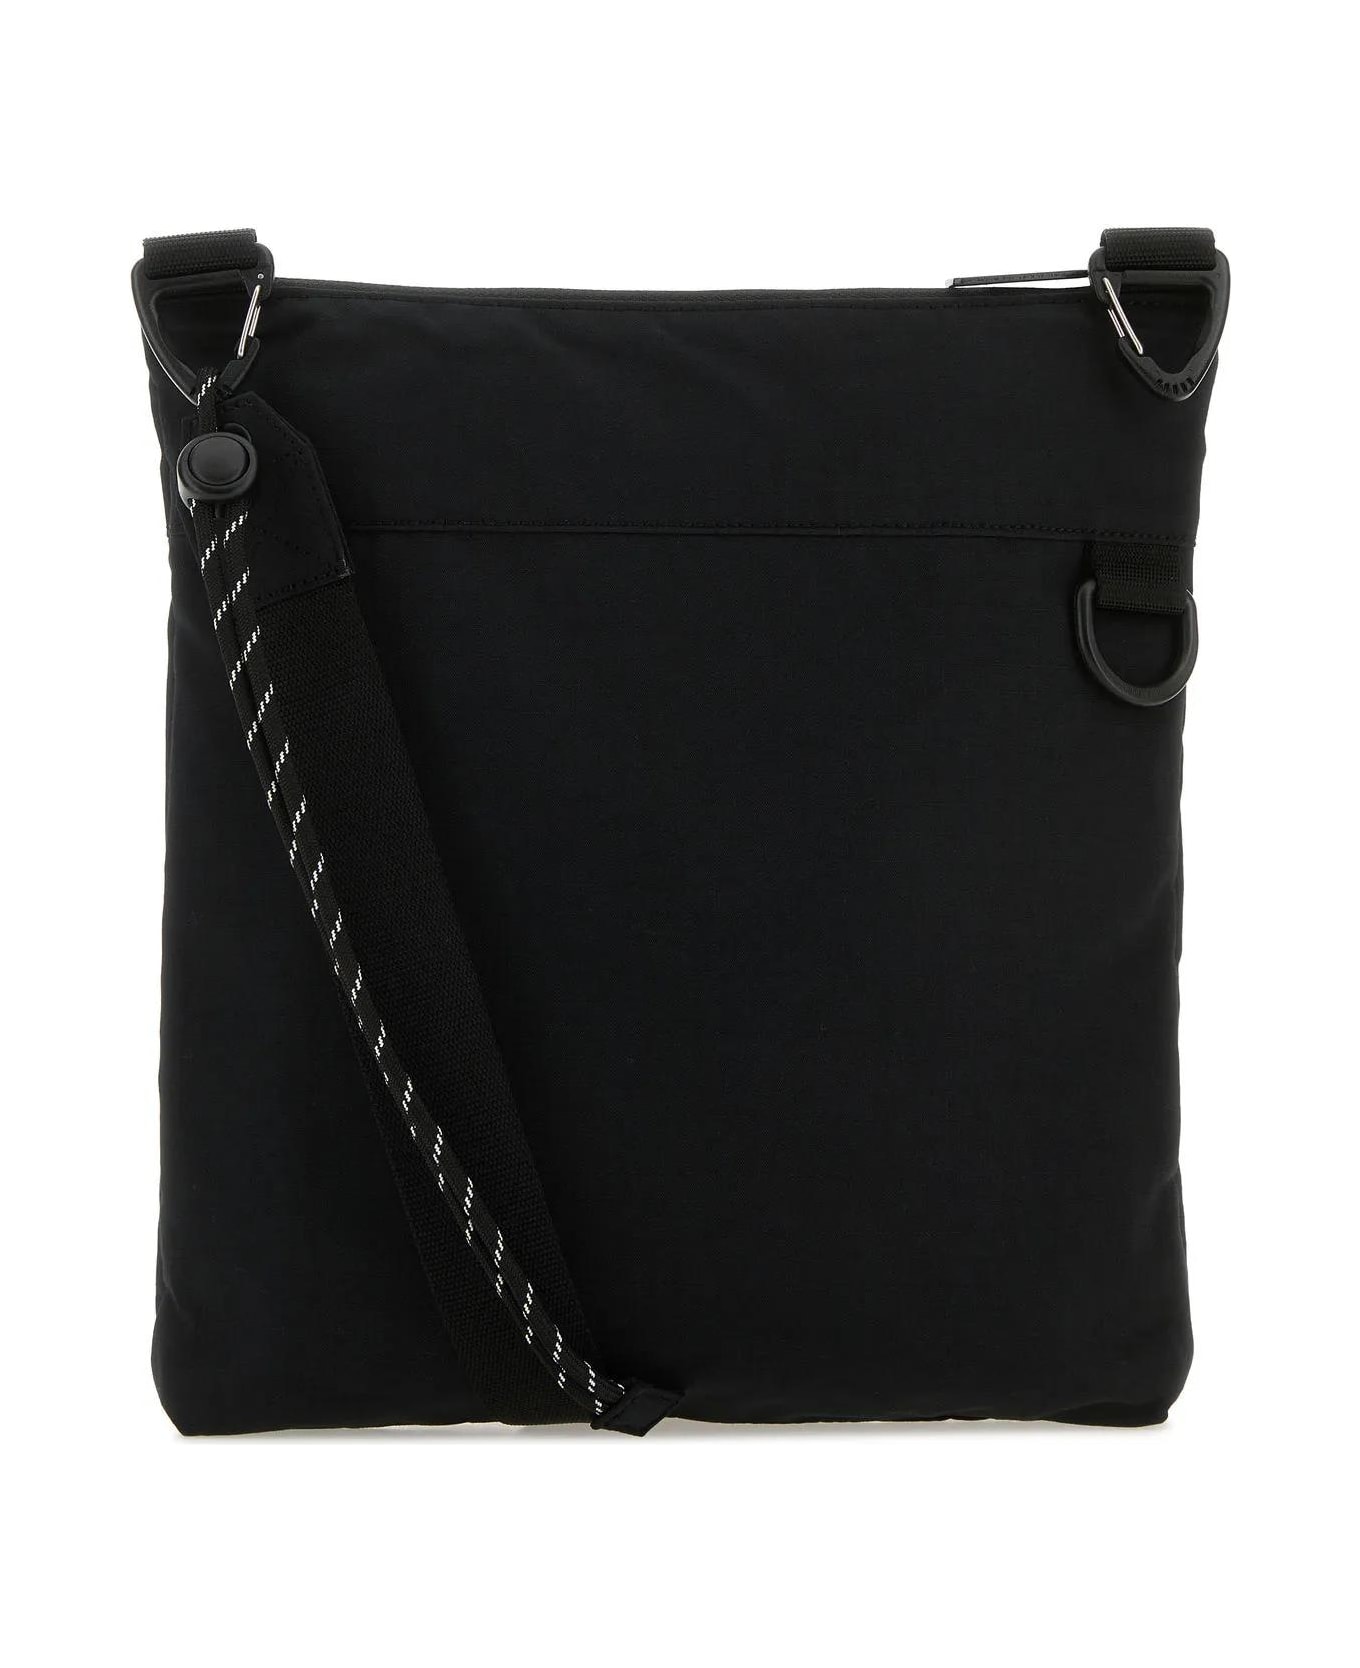 Carhartt Black Cotton Blend Haste Strap Bag - Black